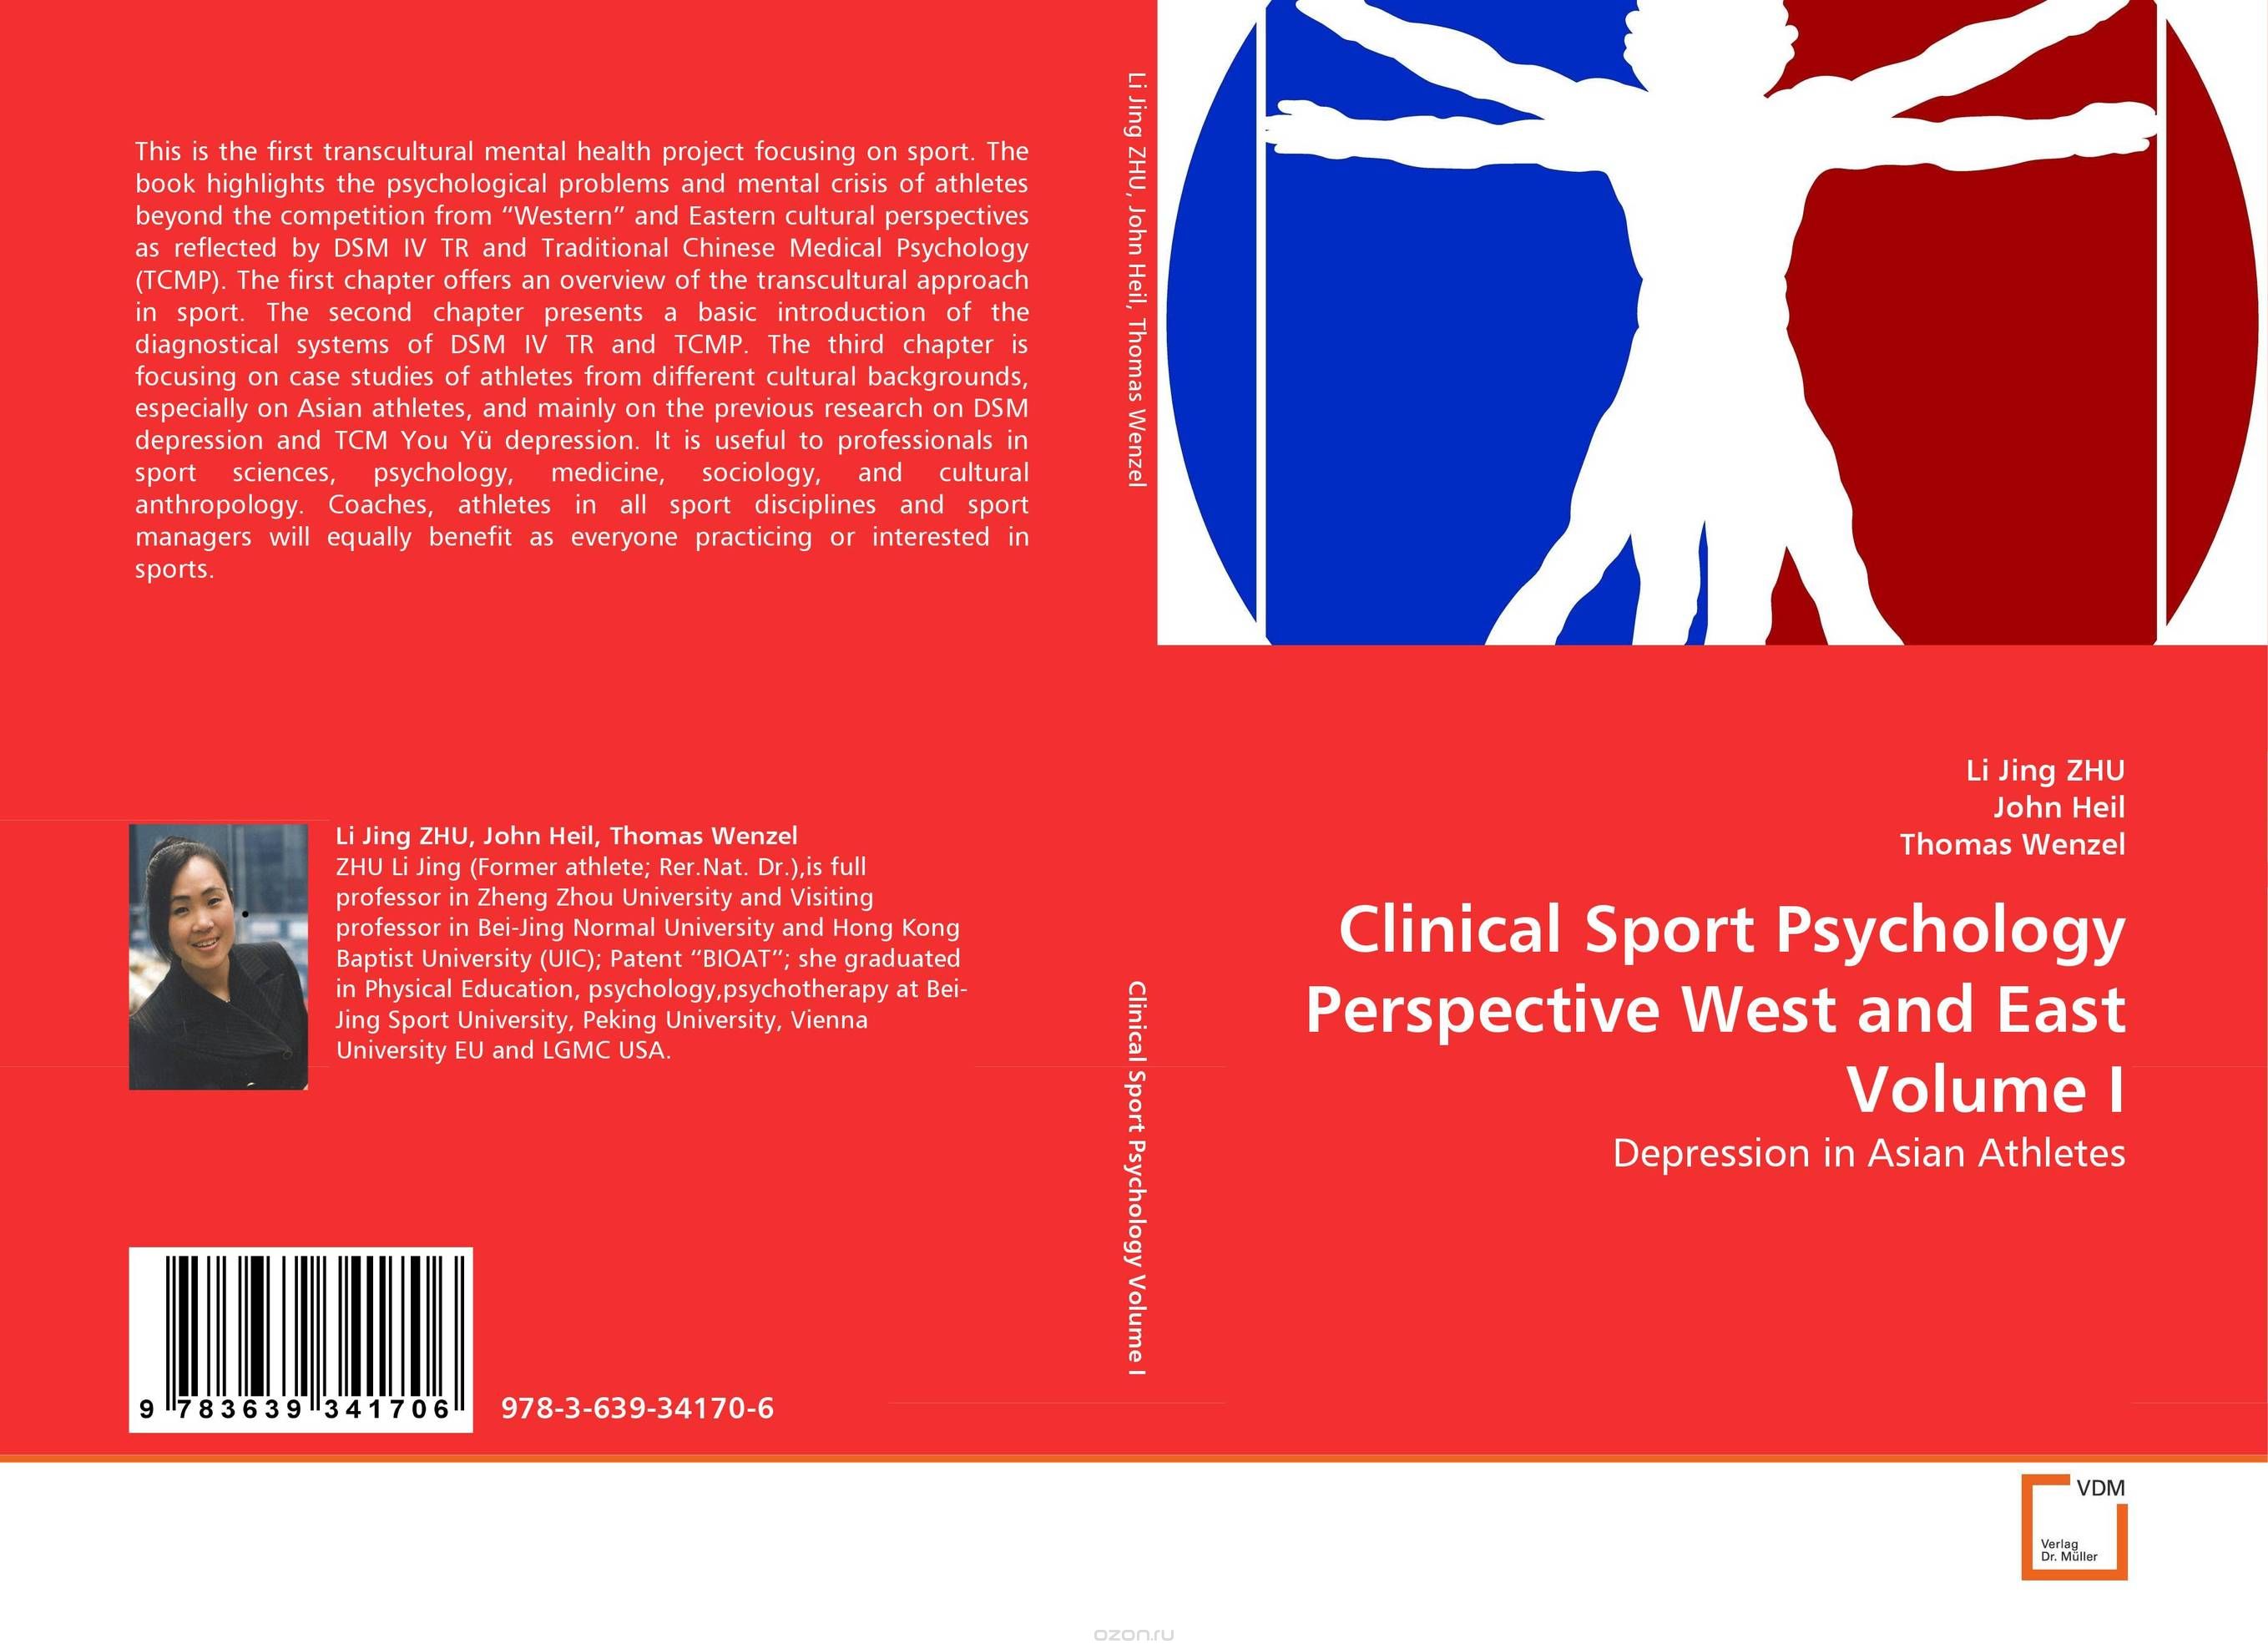 Скачать книгу "Clinical Sport Psychology Perspective West and East Volume I"